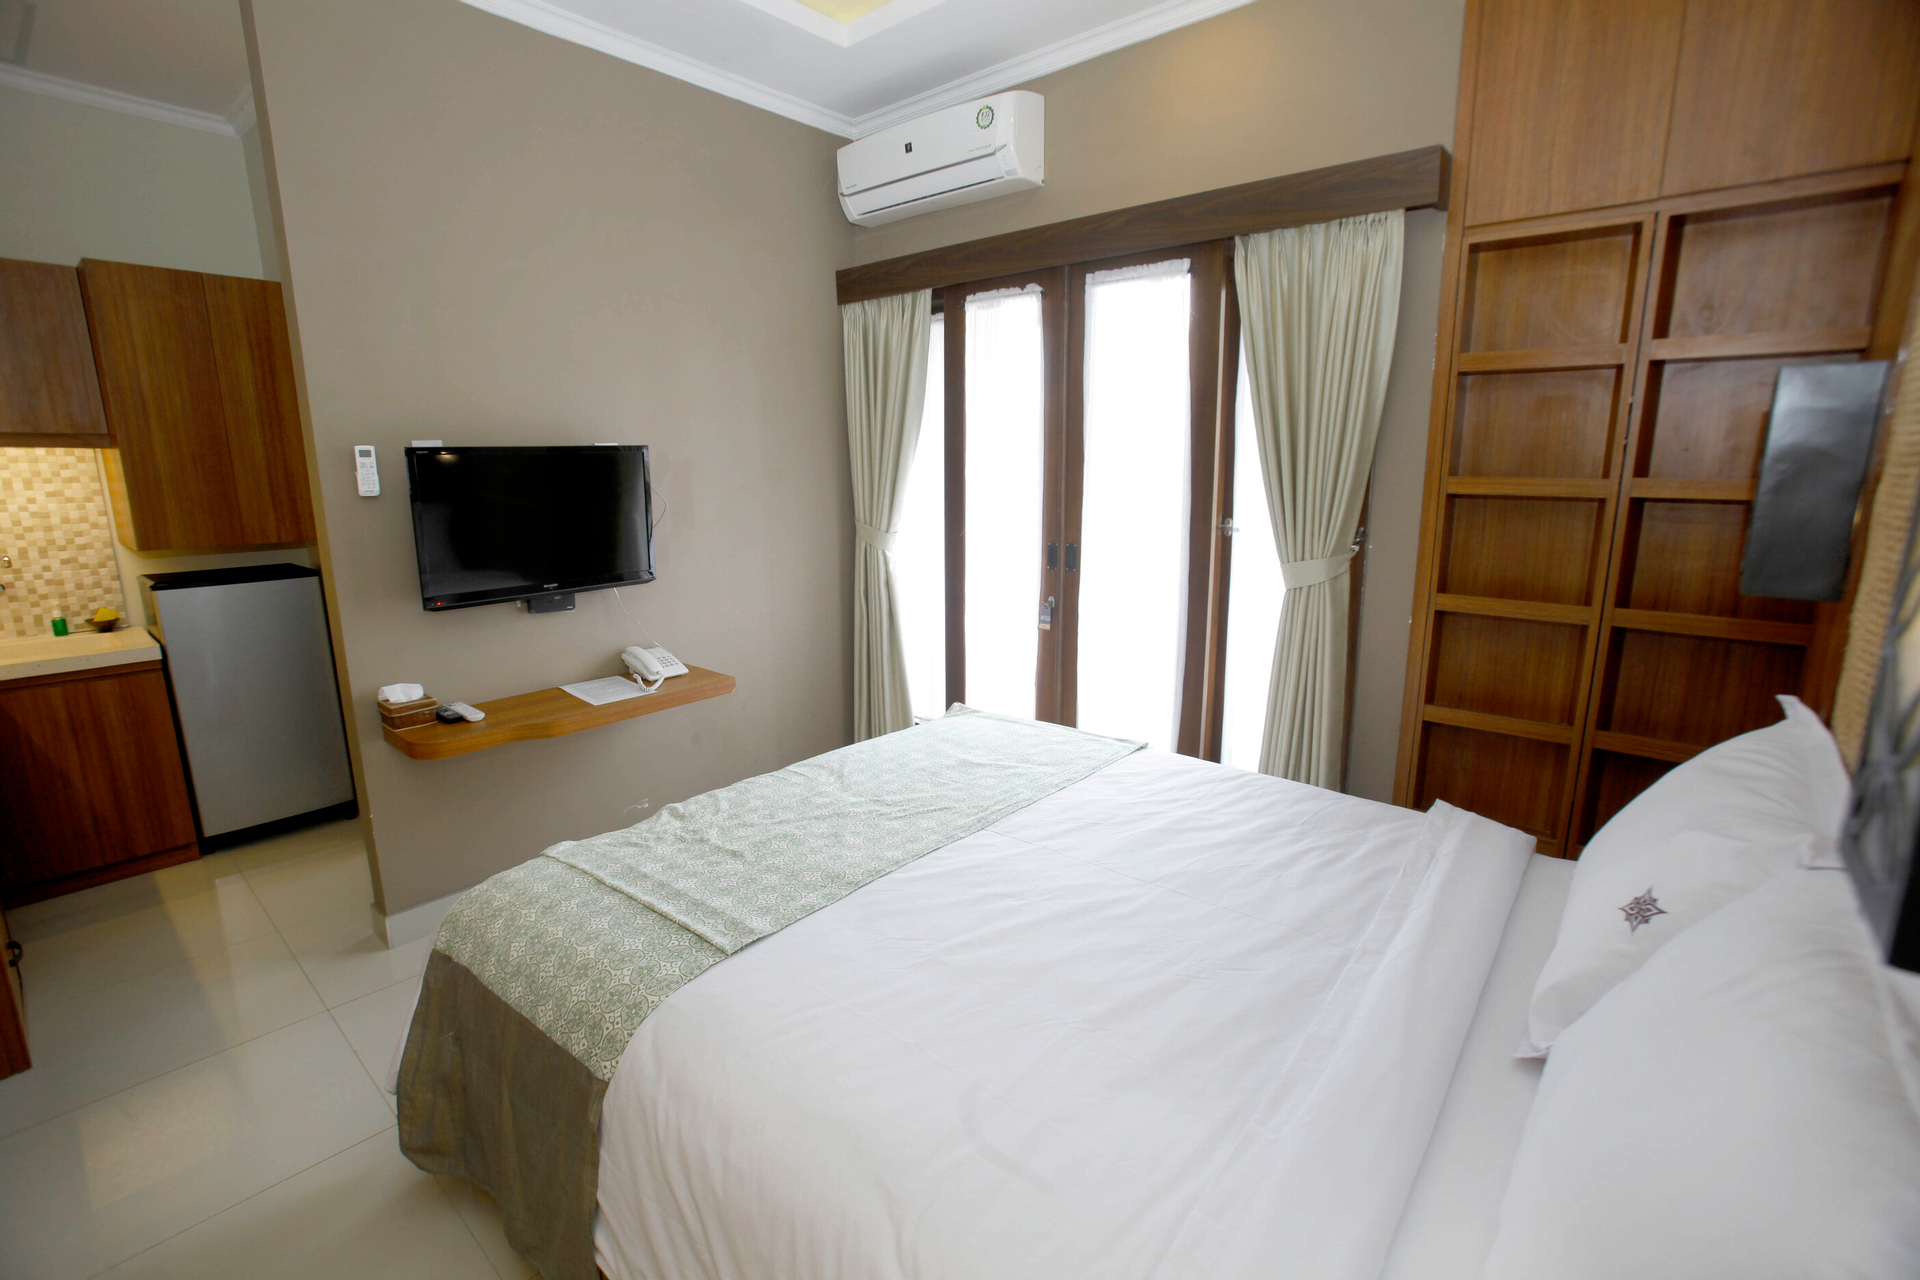 Bedroom 4, Rumah Kandjani, Yogyakarta